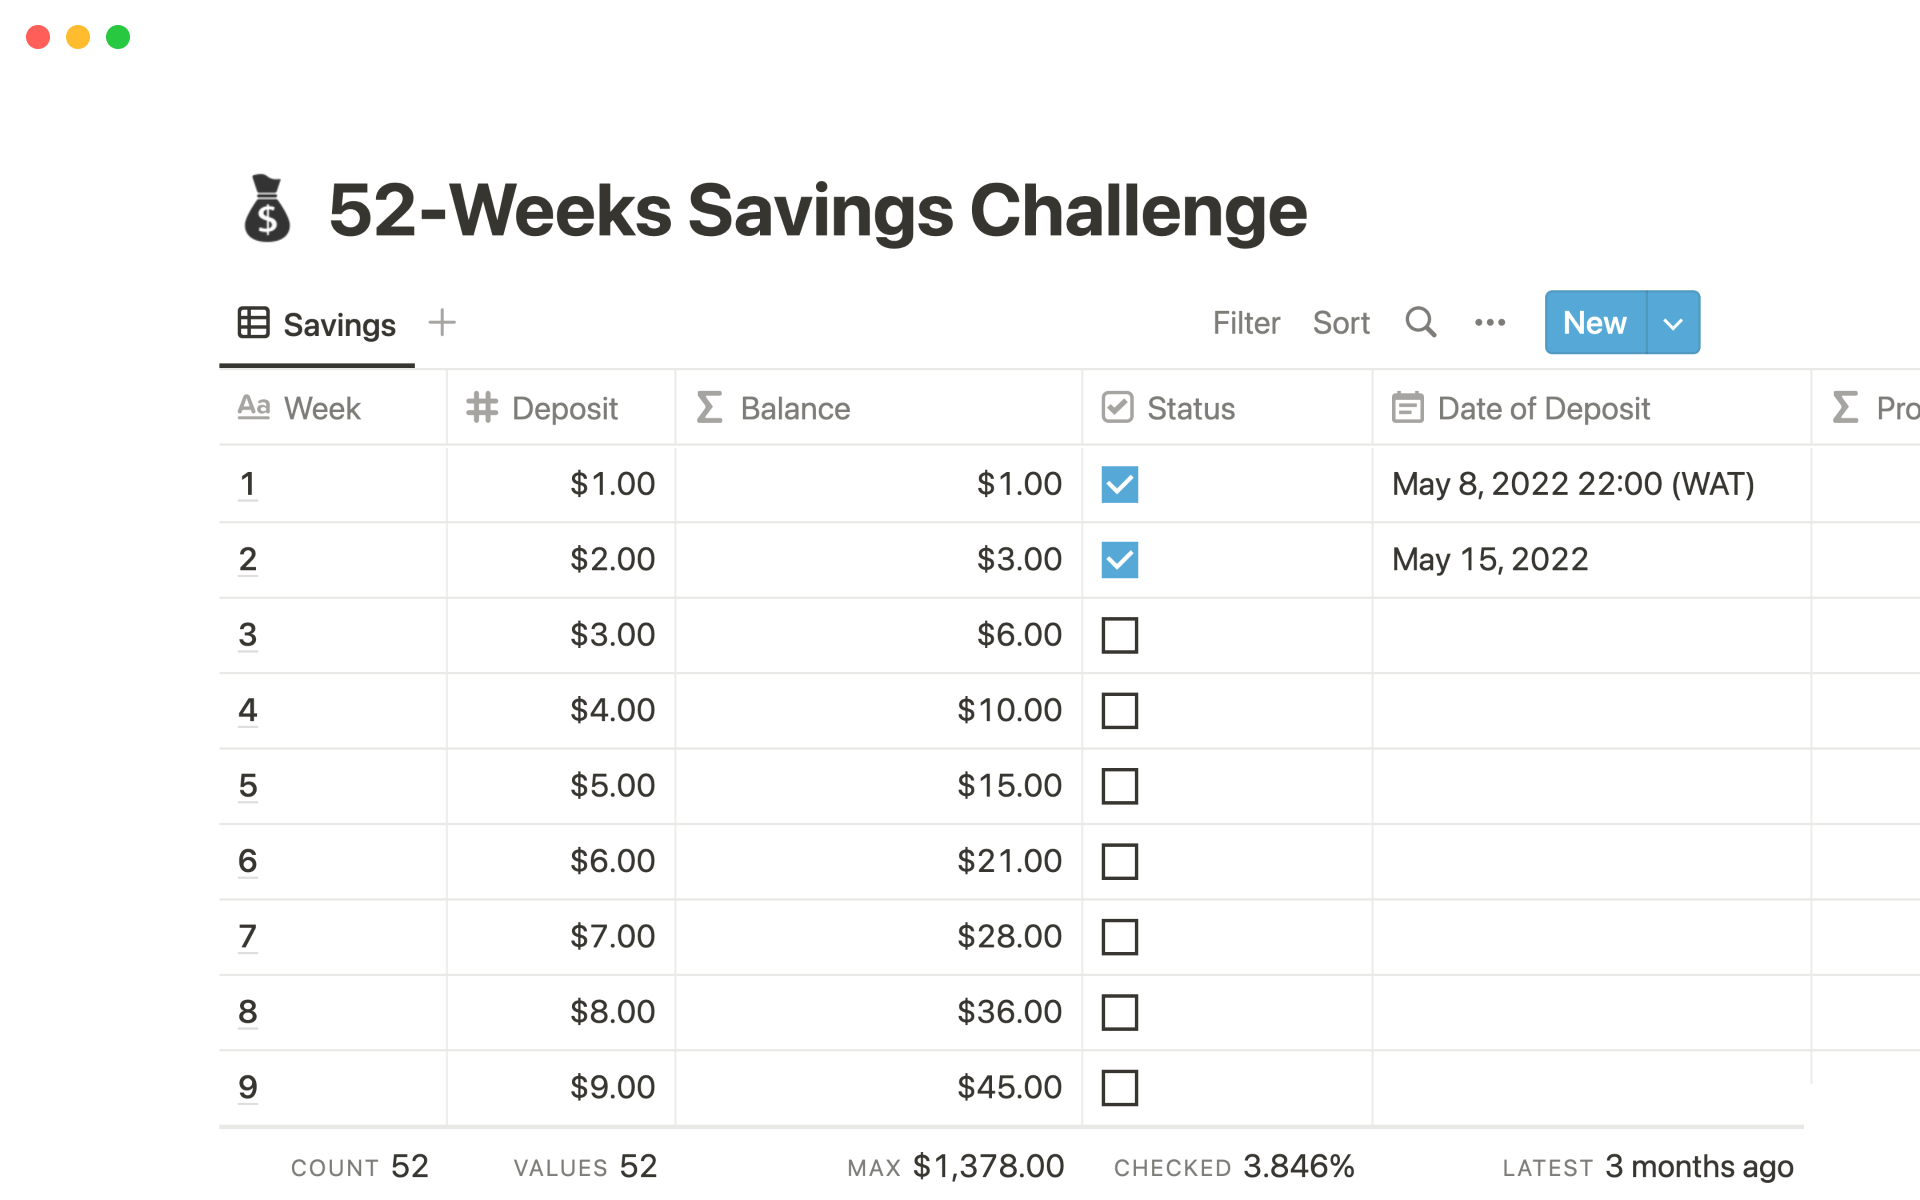 52 week money challenge spreadsheet